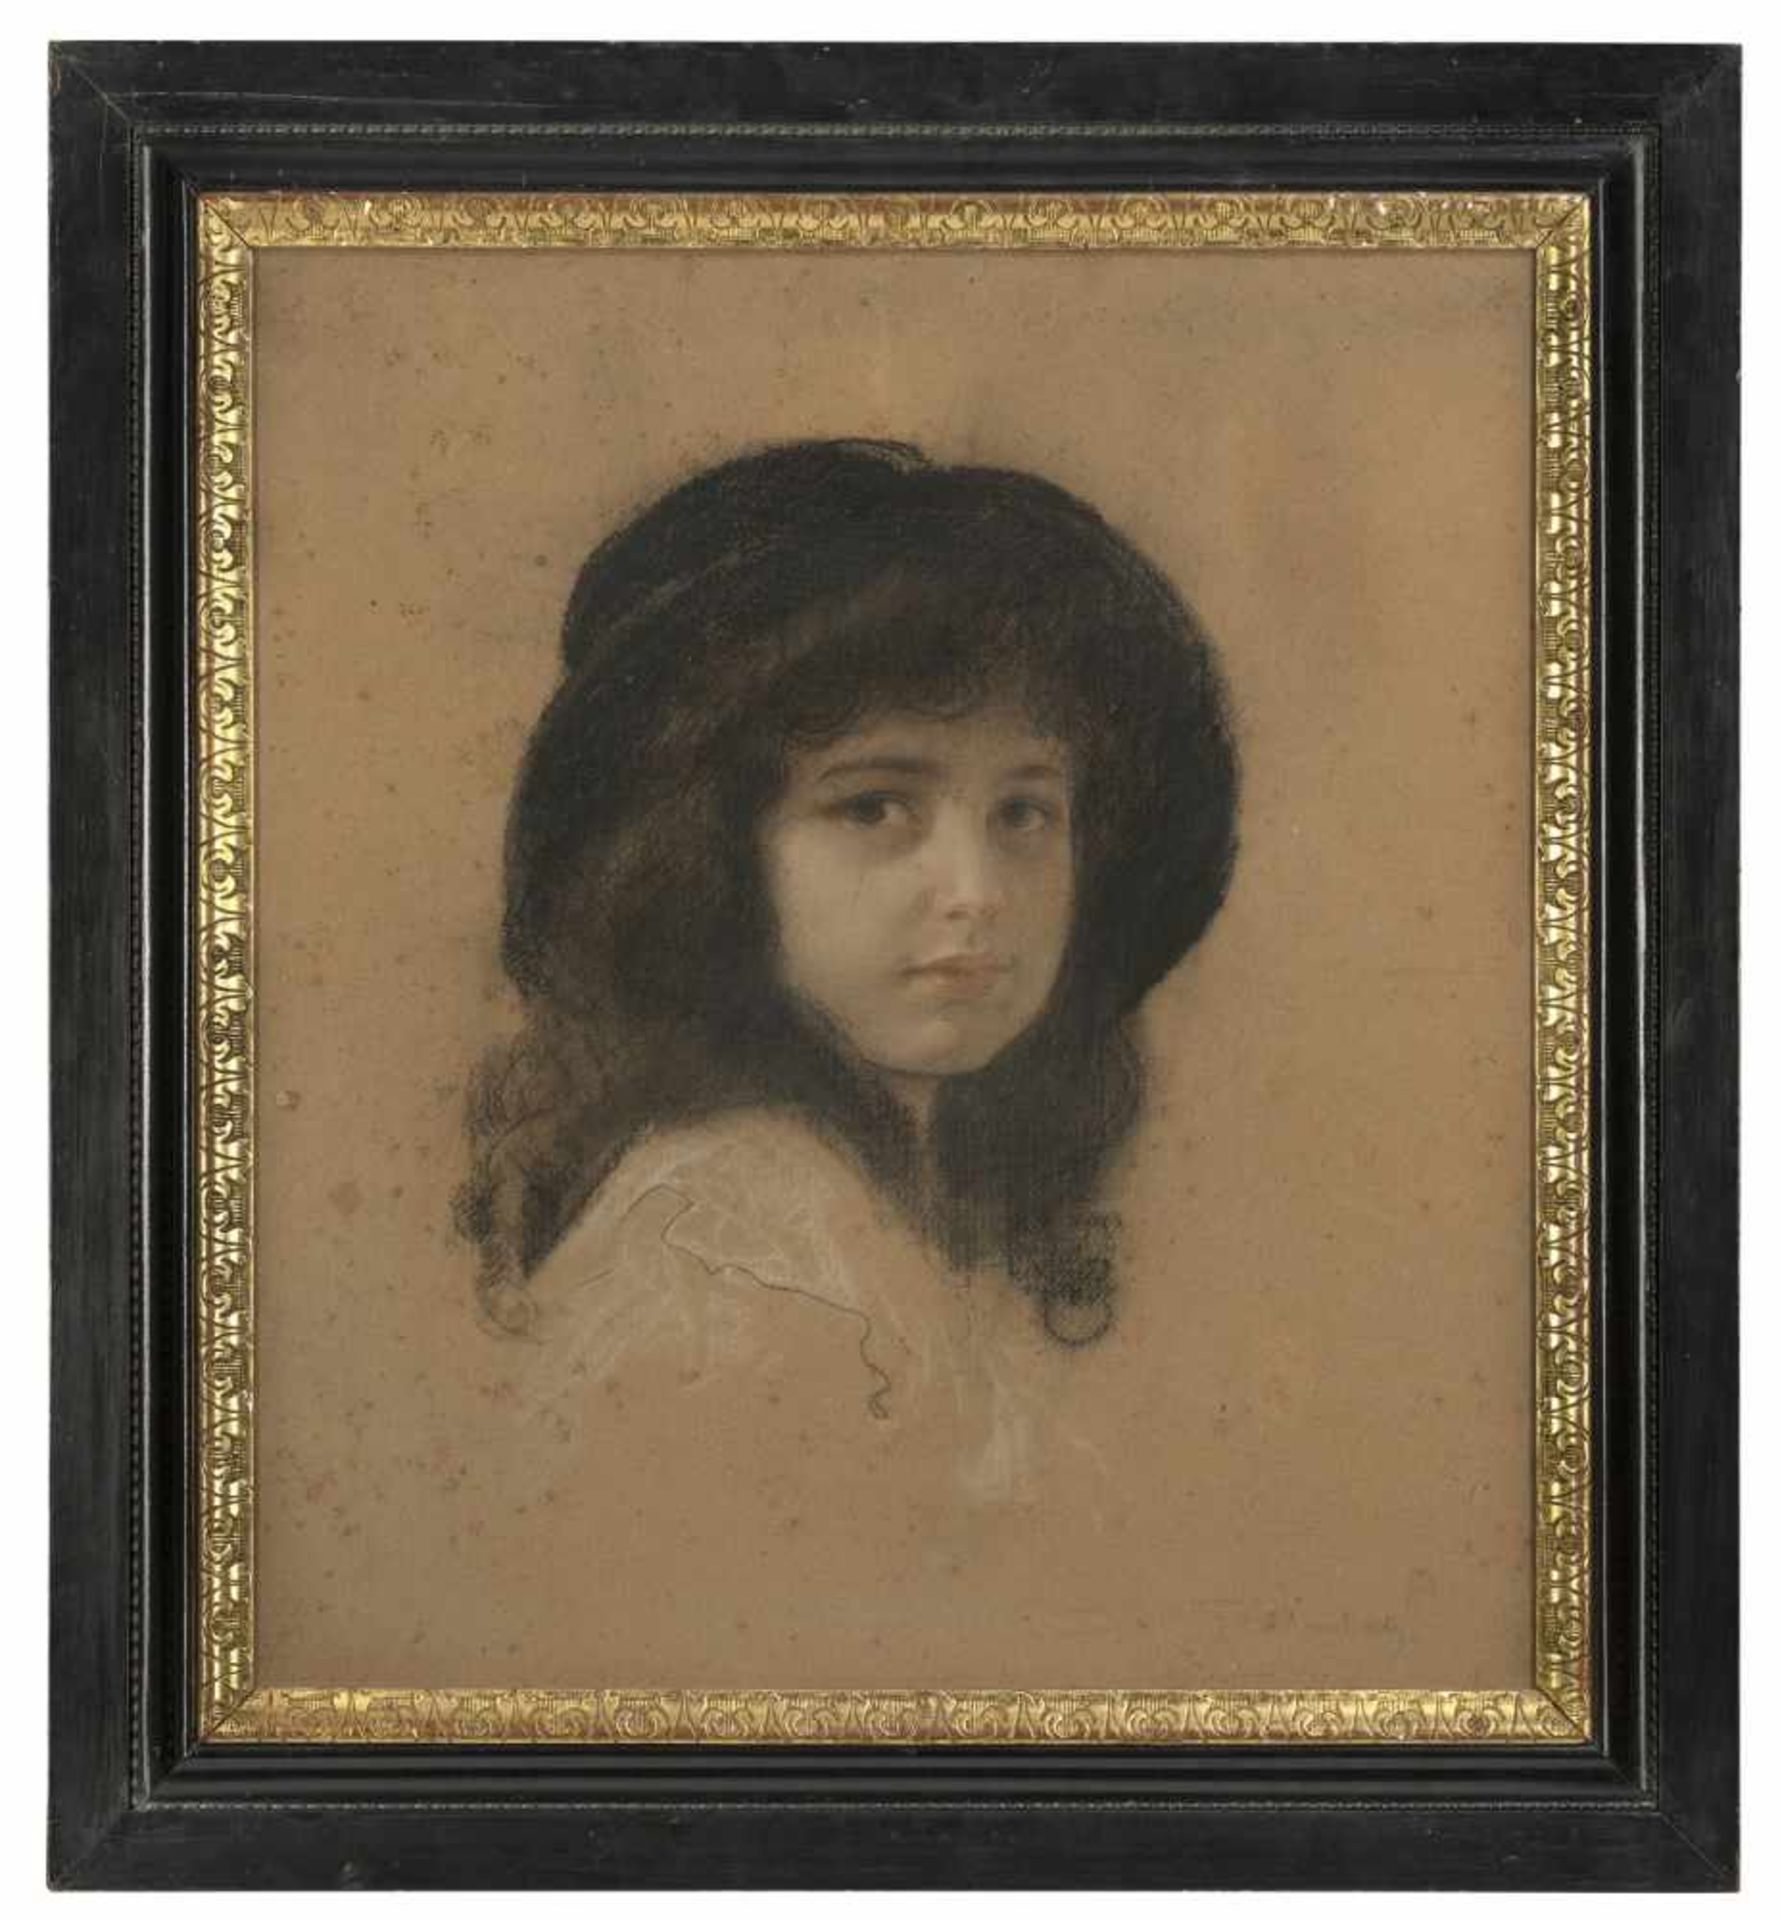 KAULBACH, FRIEDRICH AUGUST VON (1850-1920). Portrait of a girl. Pastel/paper, signed. According to